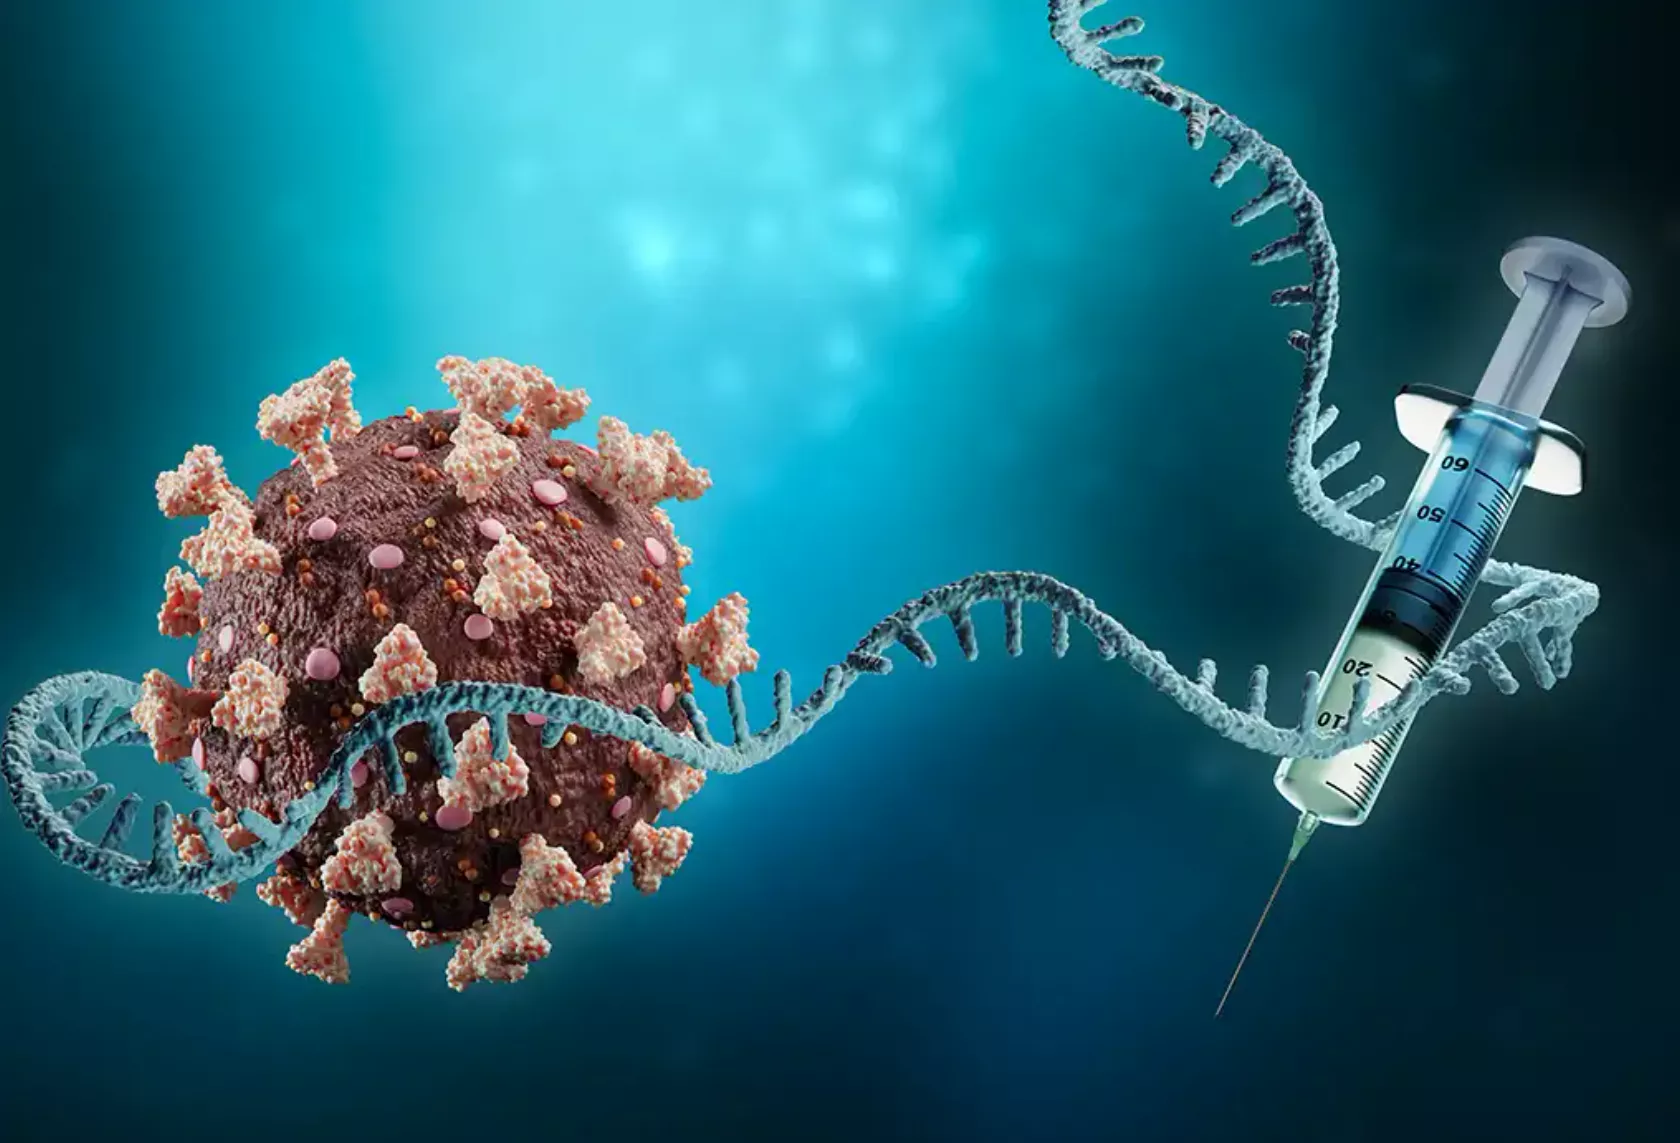 KI-Bild: Coronavirus, DNA-Strang und aufgezogene Spritze.